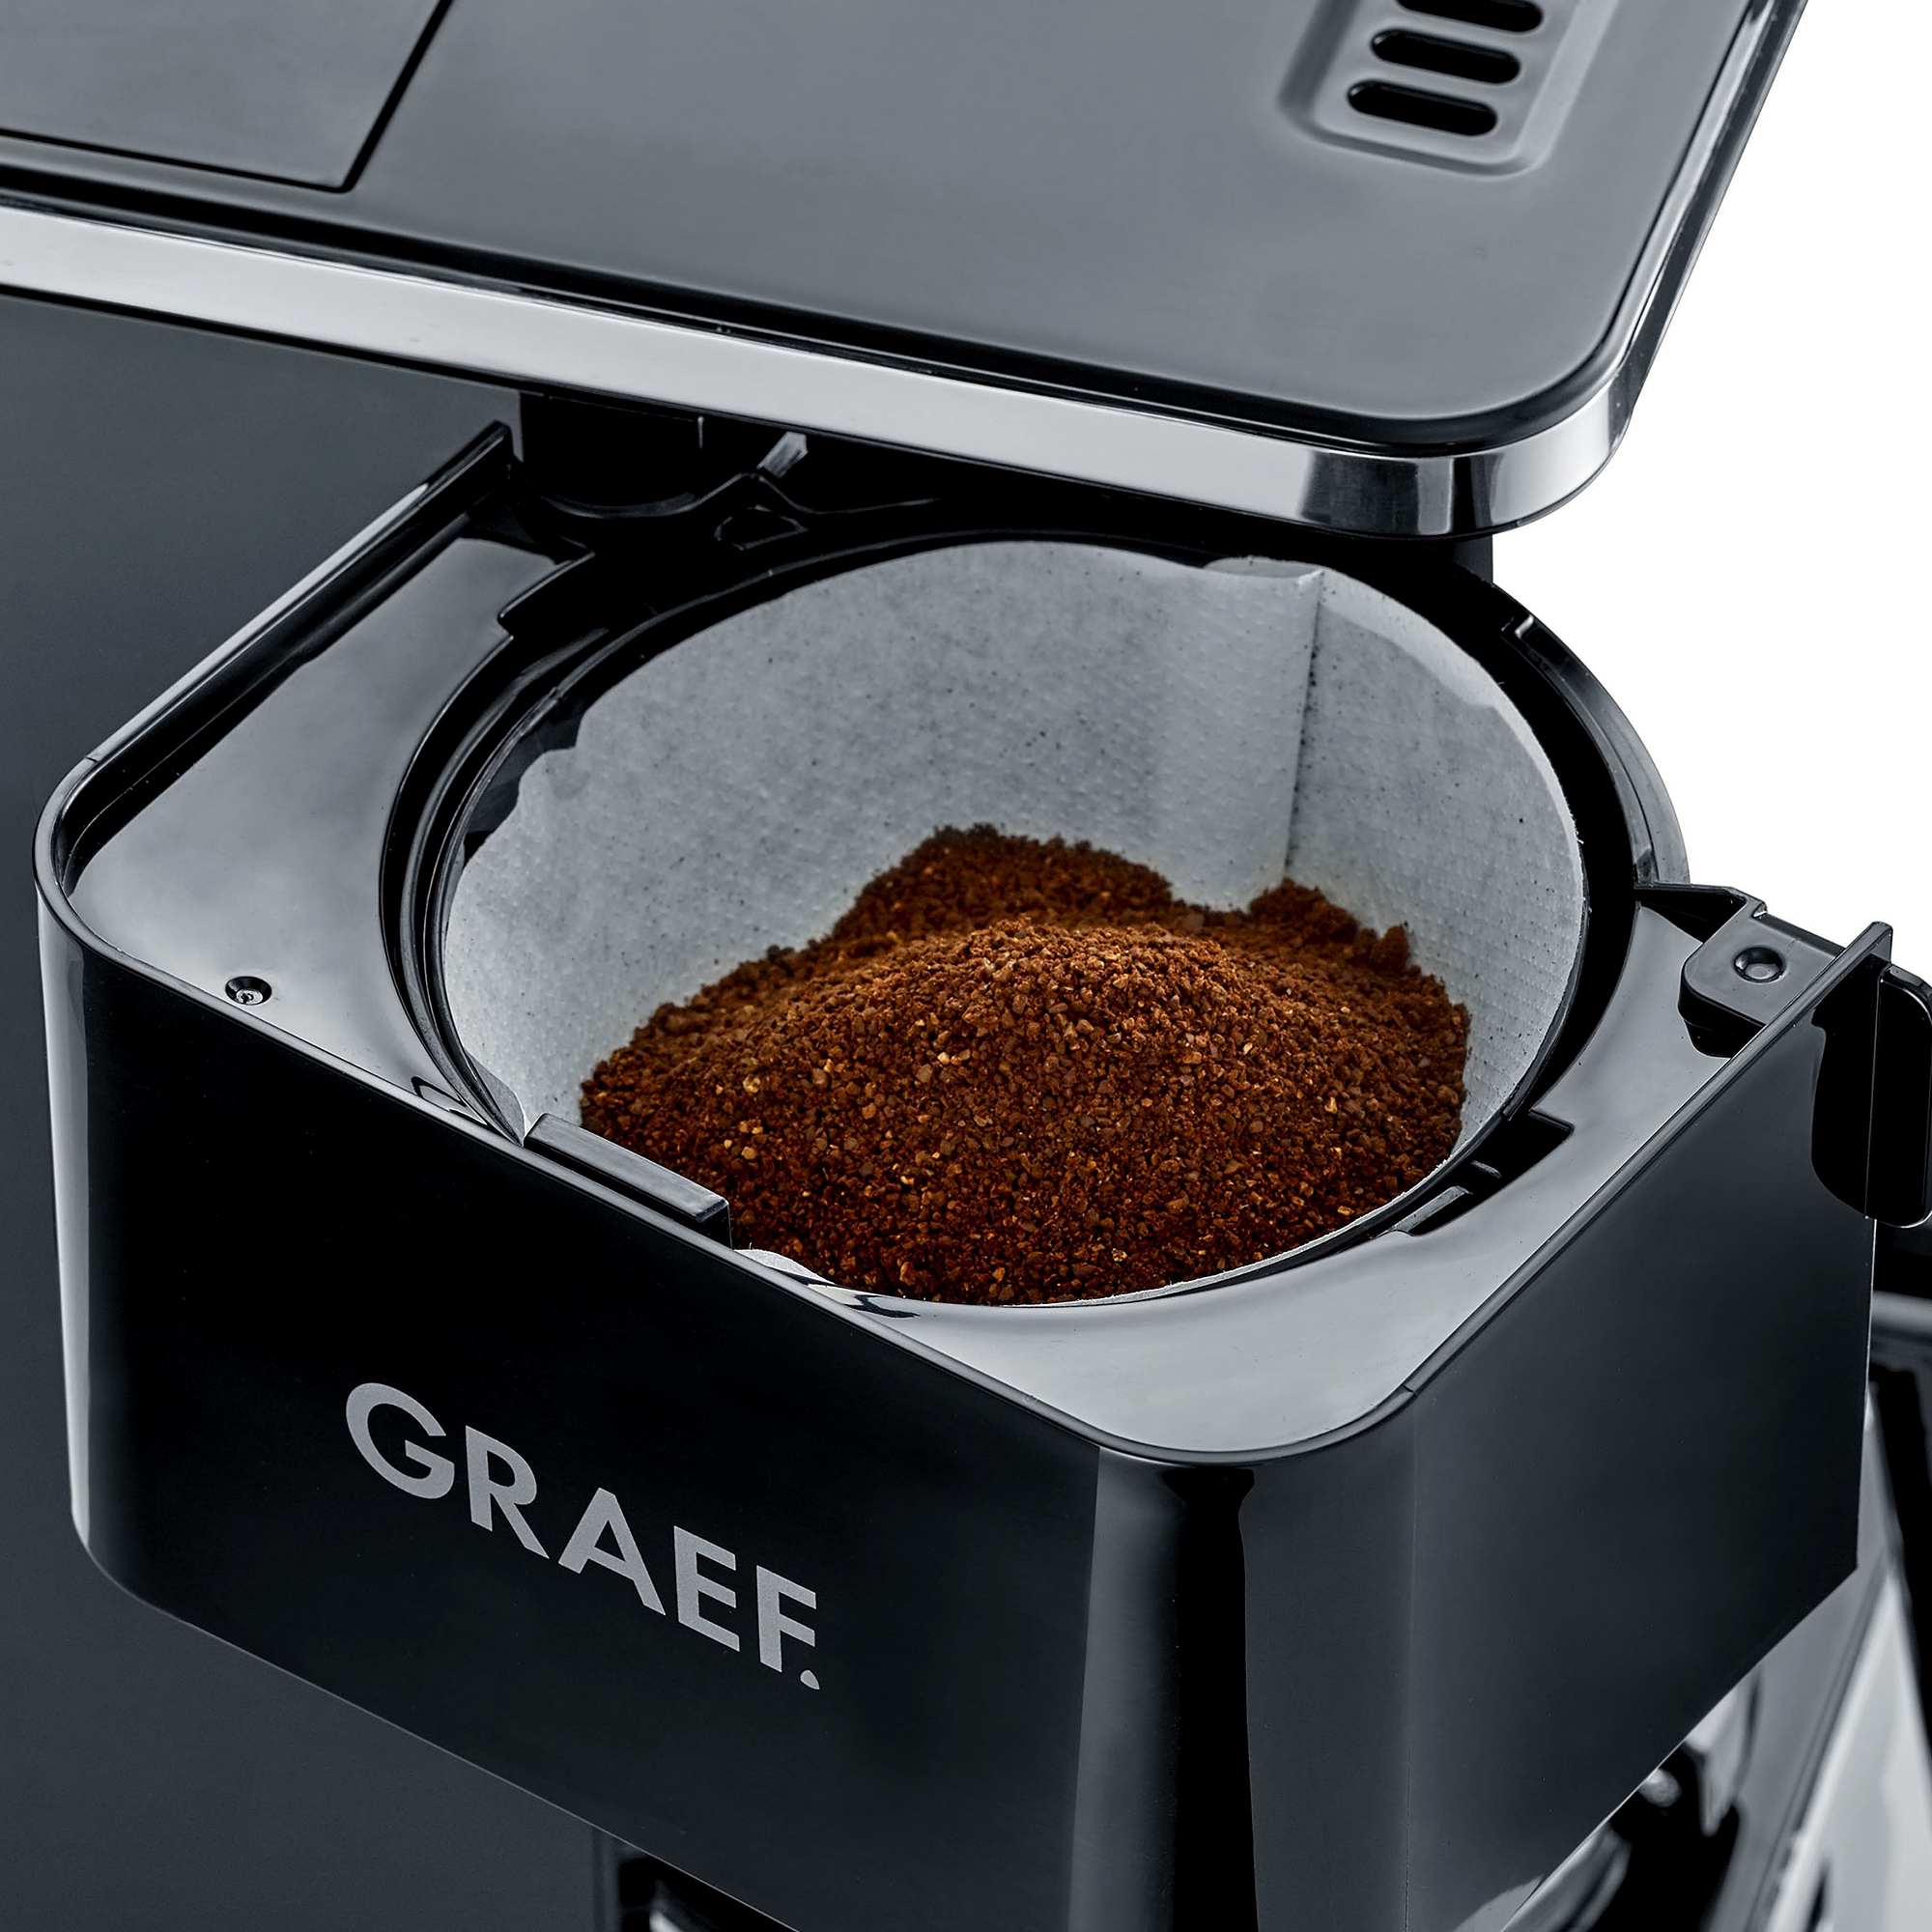 Graef Filter Coffee Maker black FK502